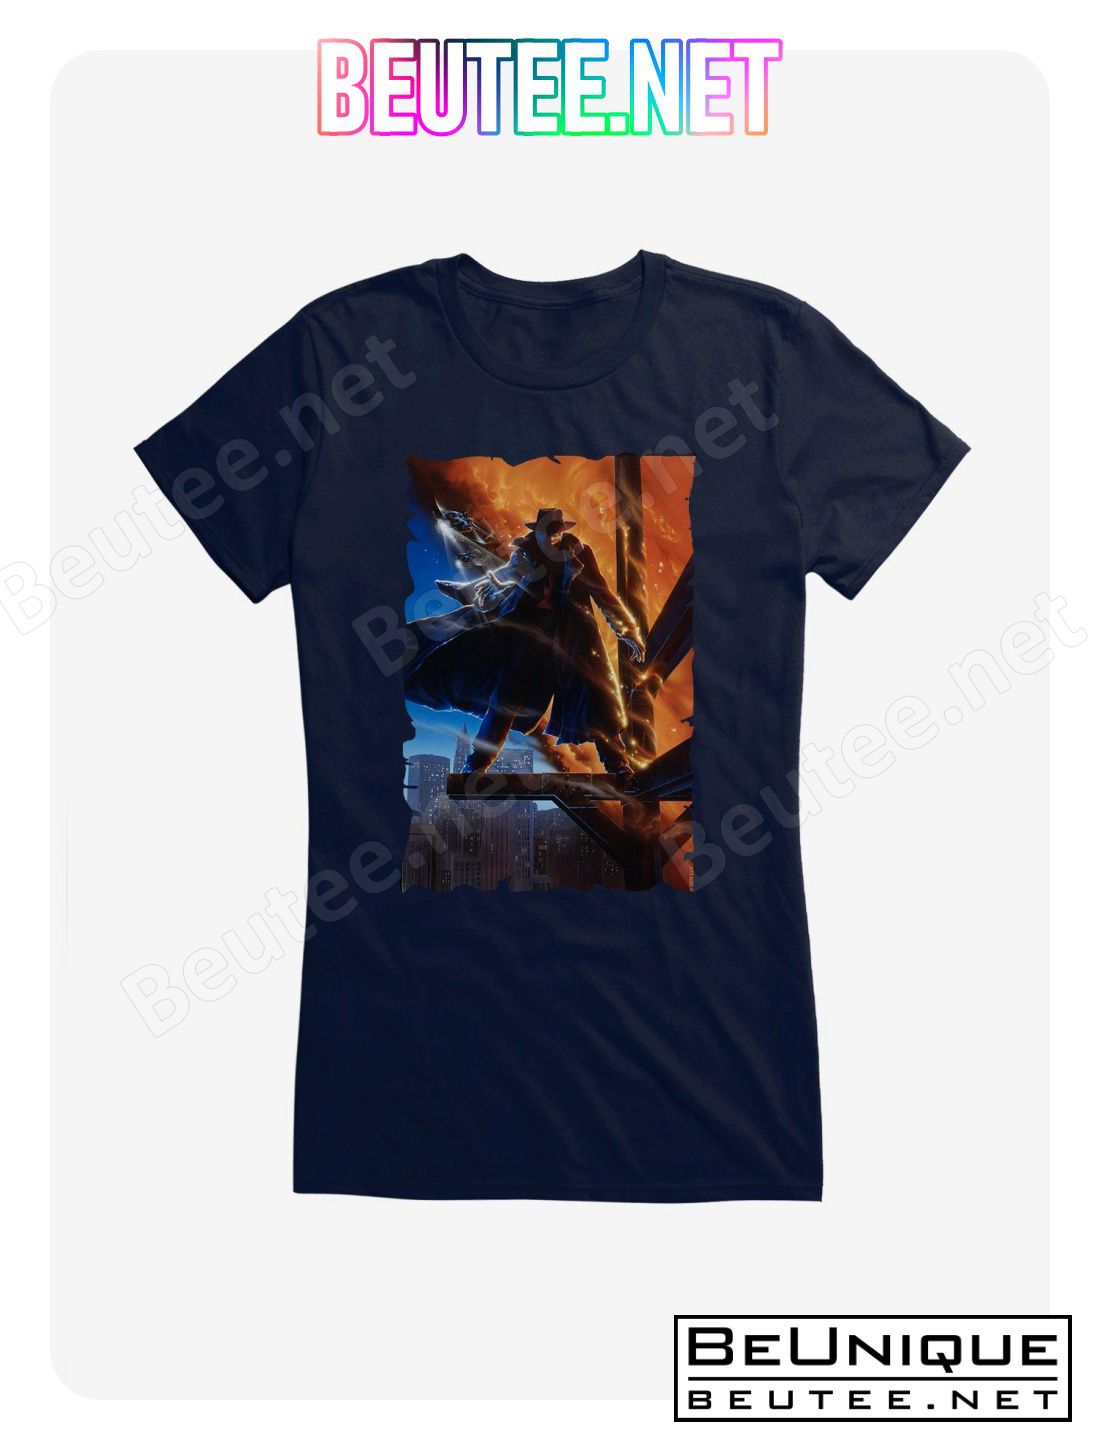 Darkman Poster T-Shirt